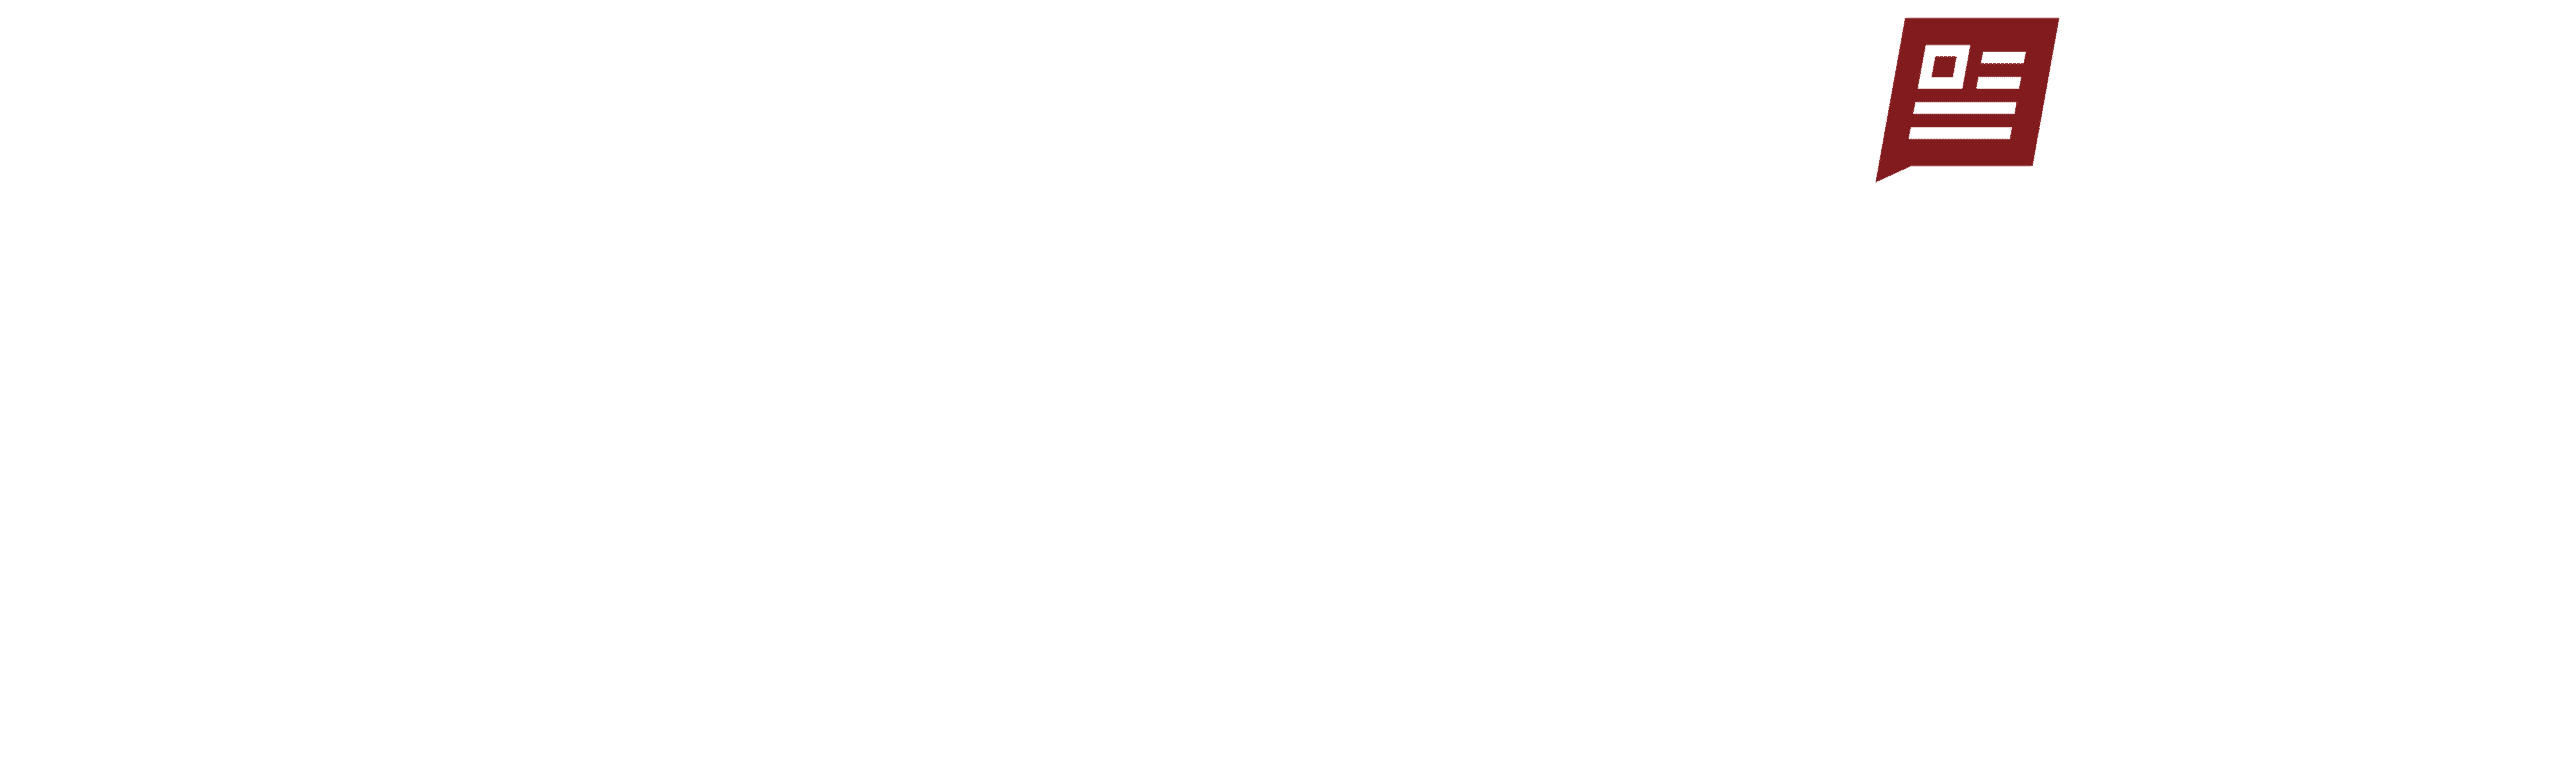 Chronos - Vivaldi avocats